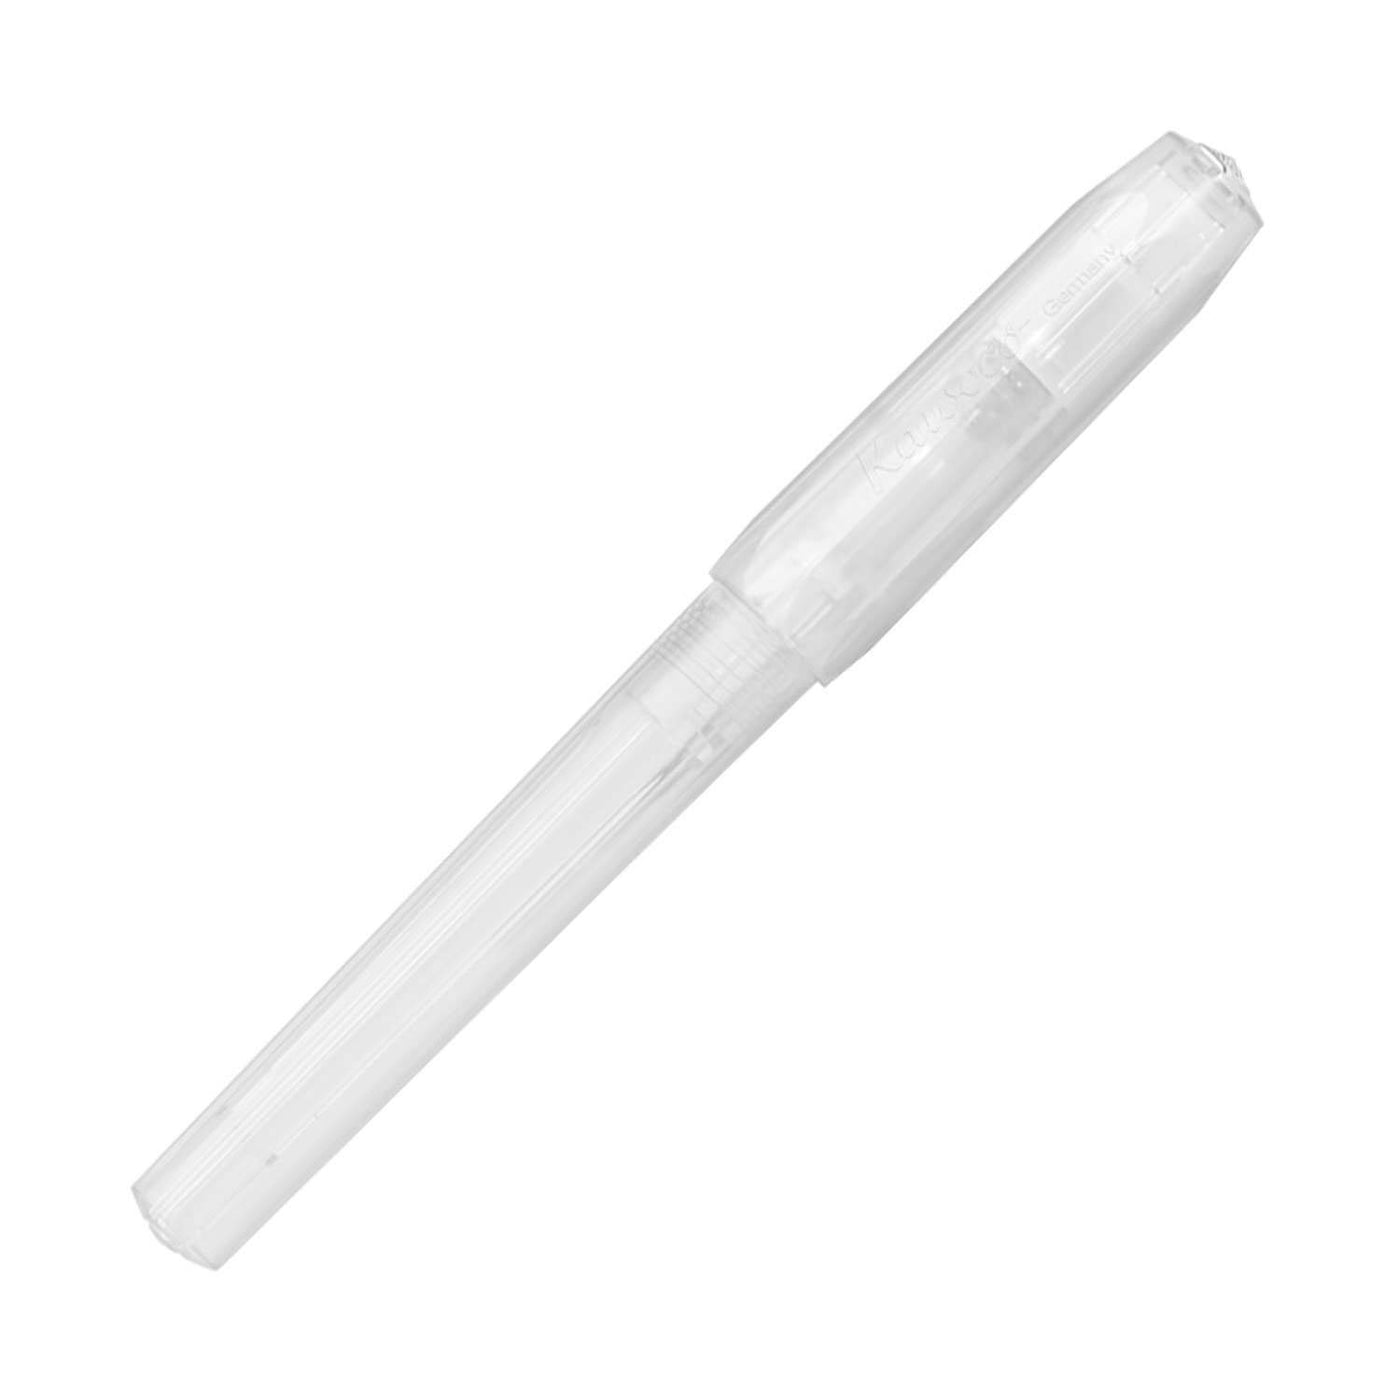 Kaweco Perkeo Roller Ball Pen, Clear